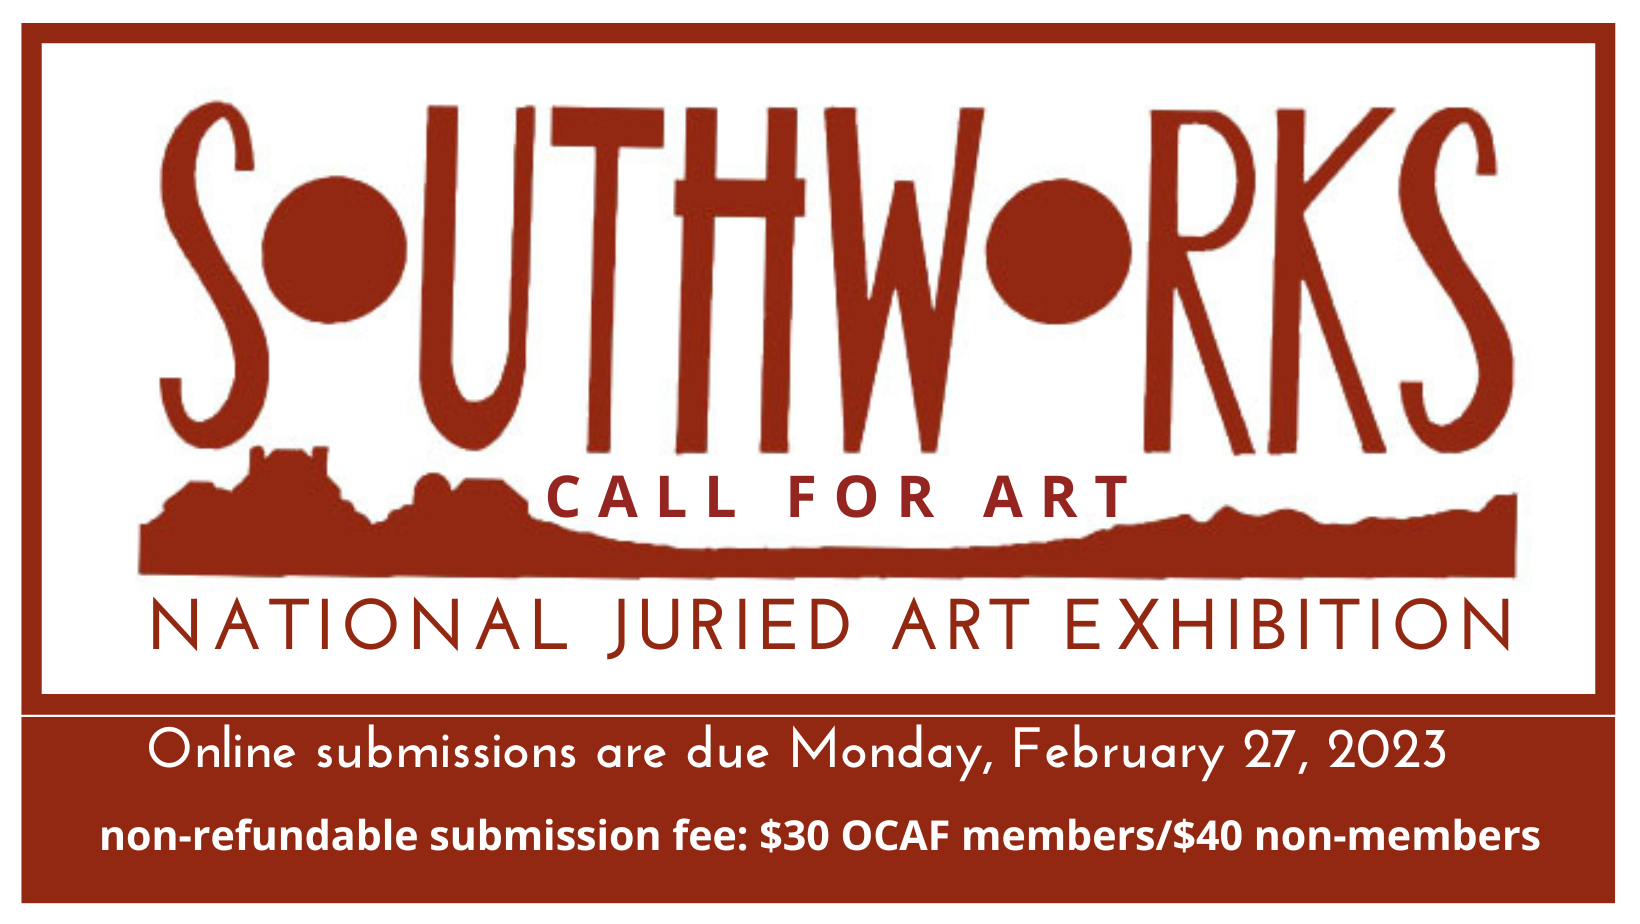 SouthWorks! Call for Art